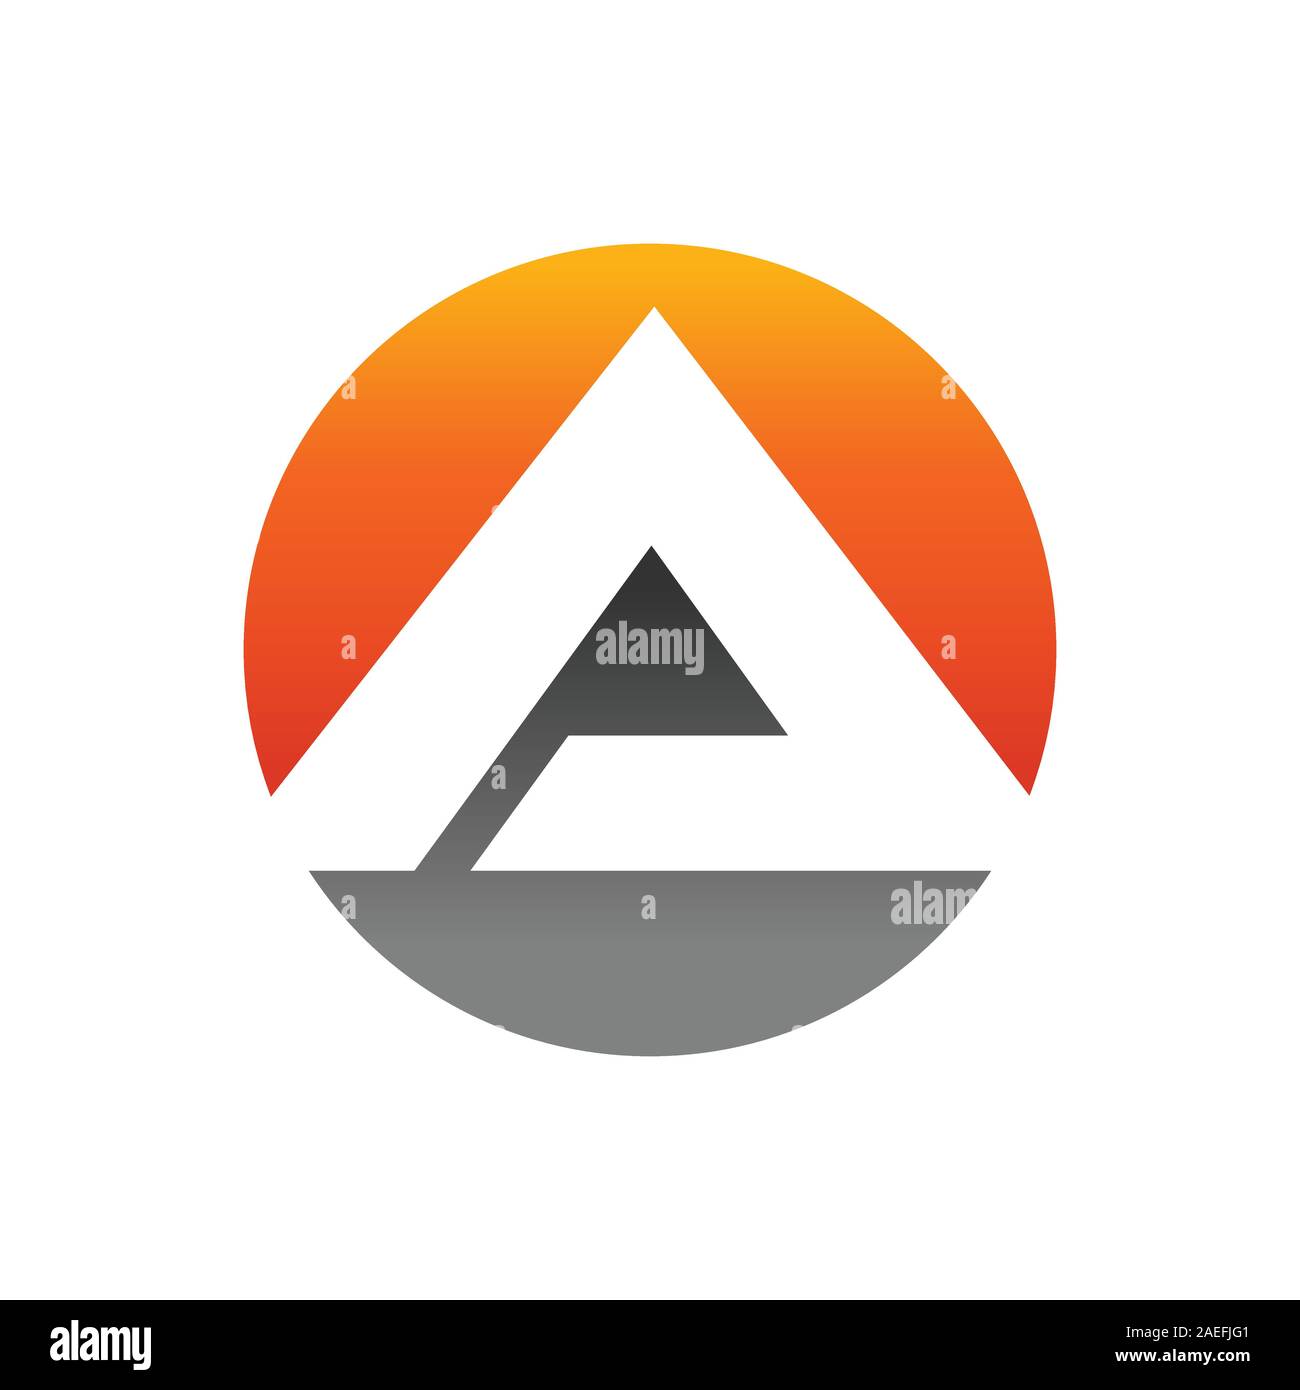 Erste ein Lettermark Pyramide im Kreis Vektor Symbol Grafik logo Icon Design Vorlage Stock Vektor